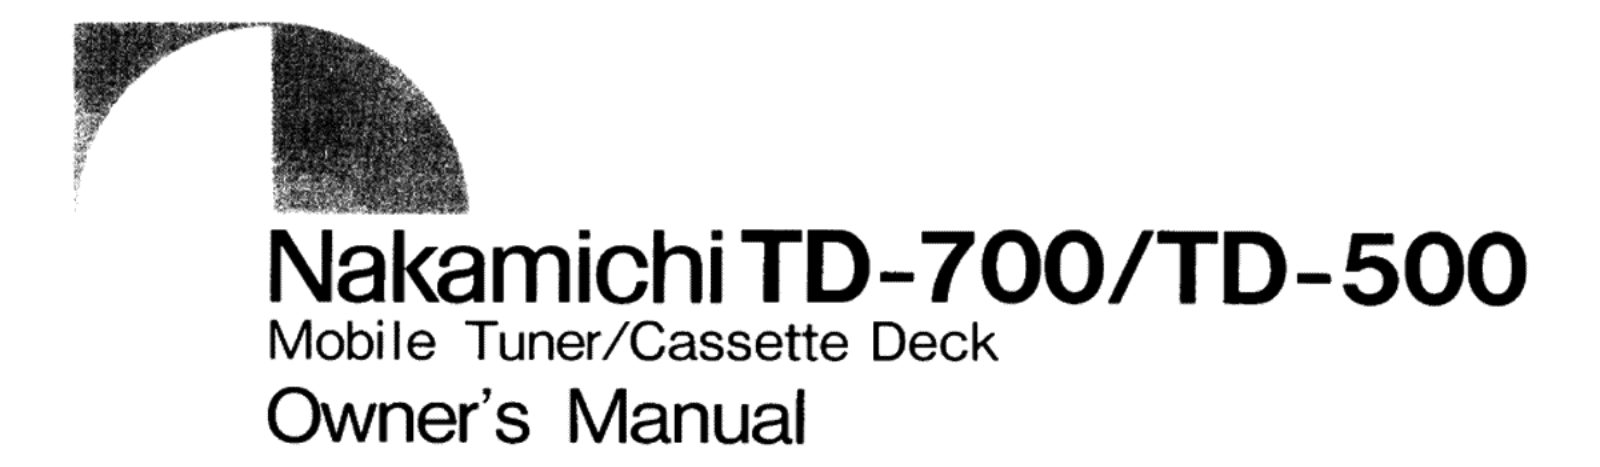 Nakamichi TD-500, TD-700 Owners manual